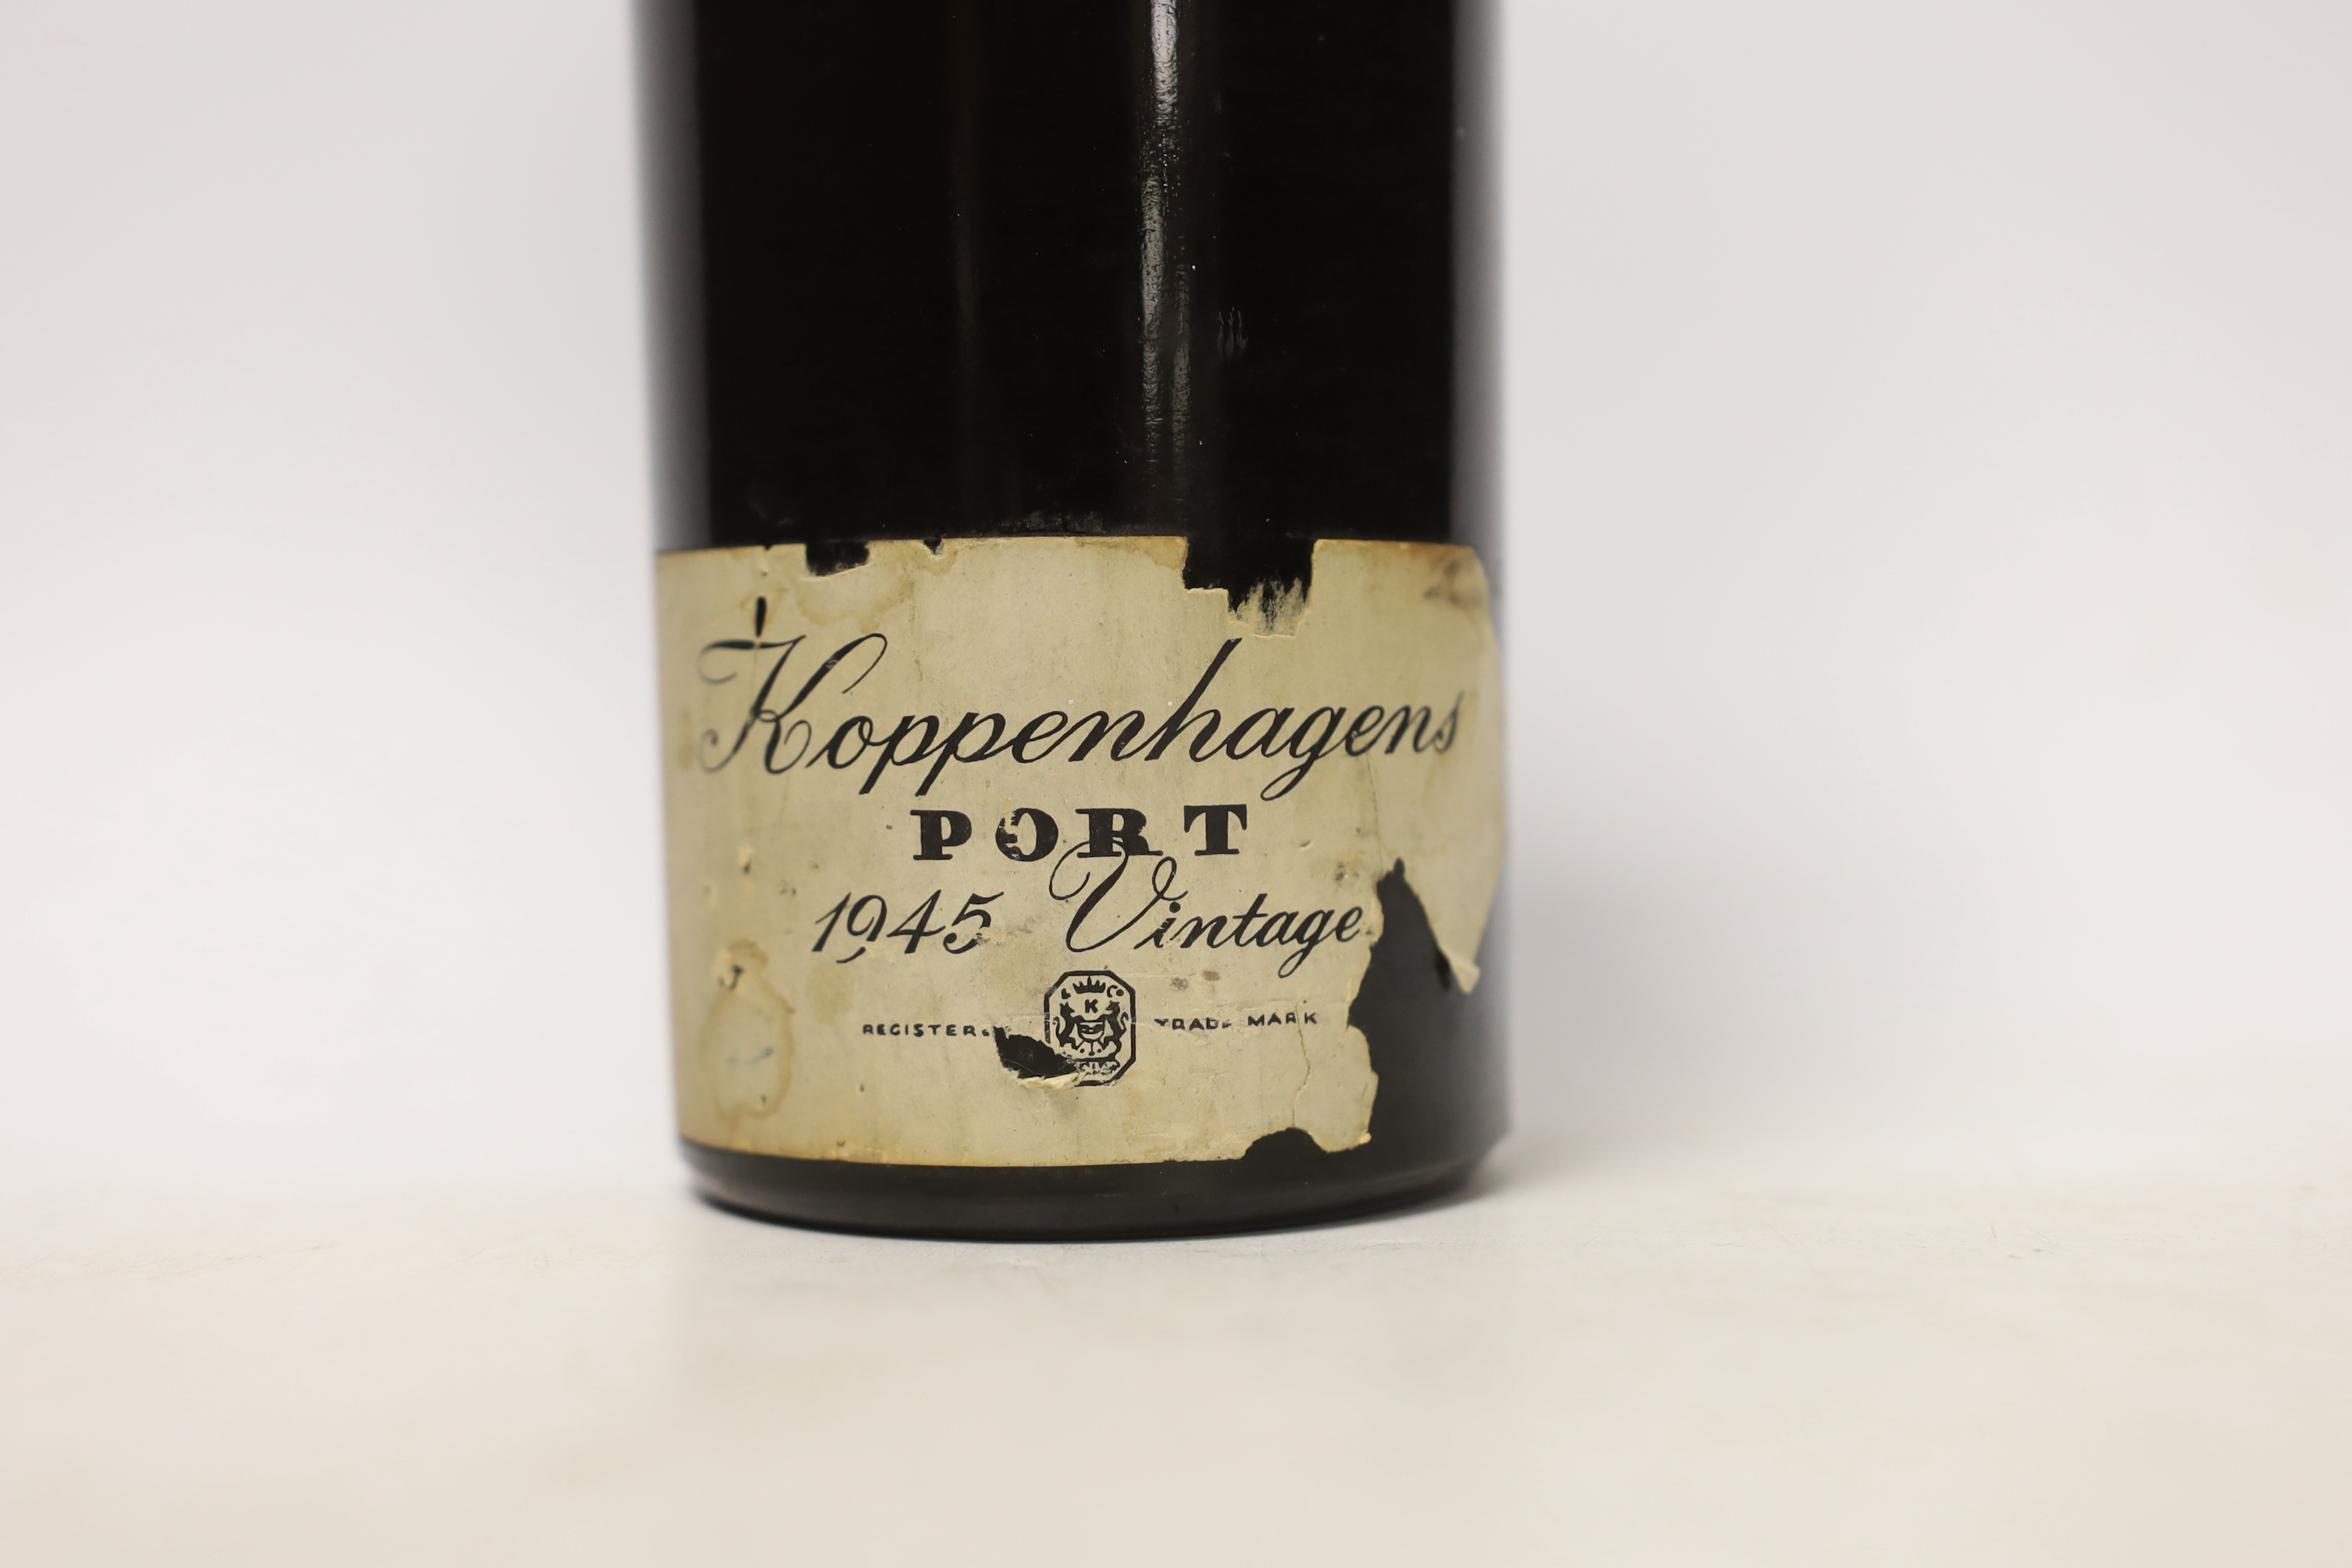 A Koppenhagens vintage bottle of Port, 1945